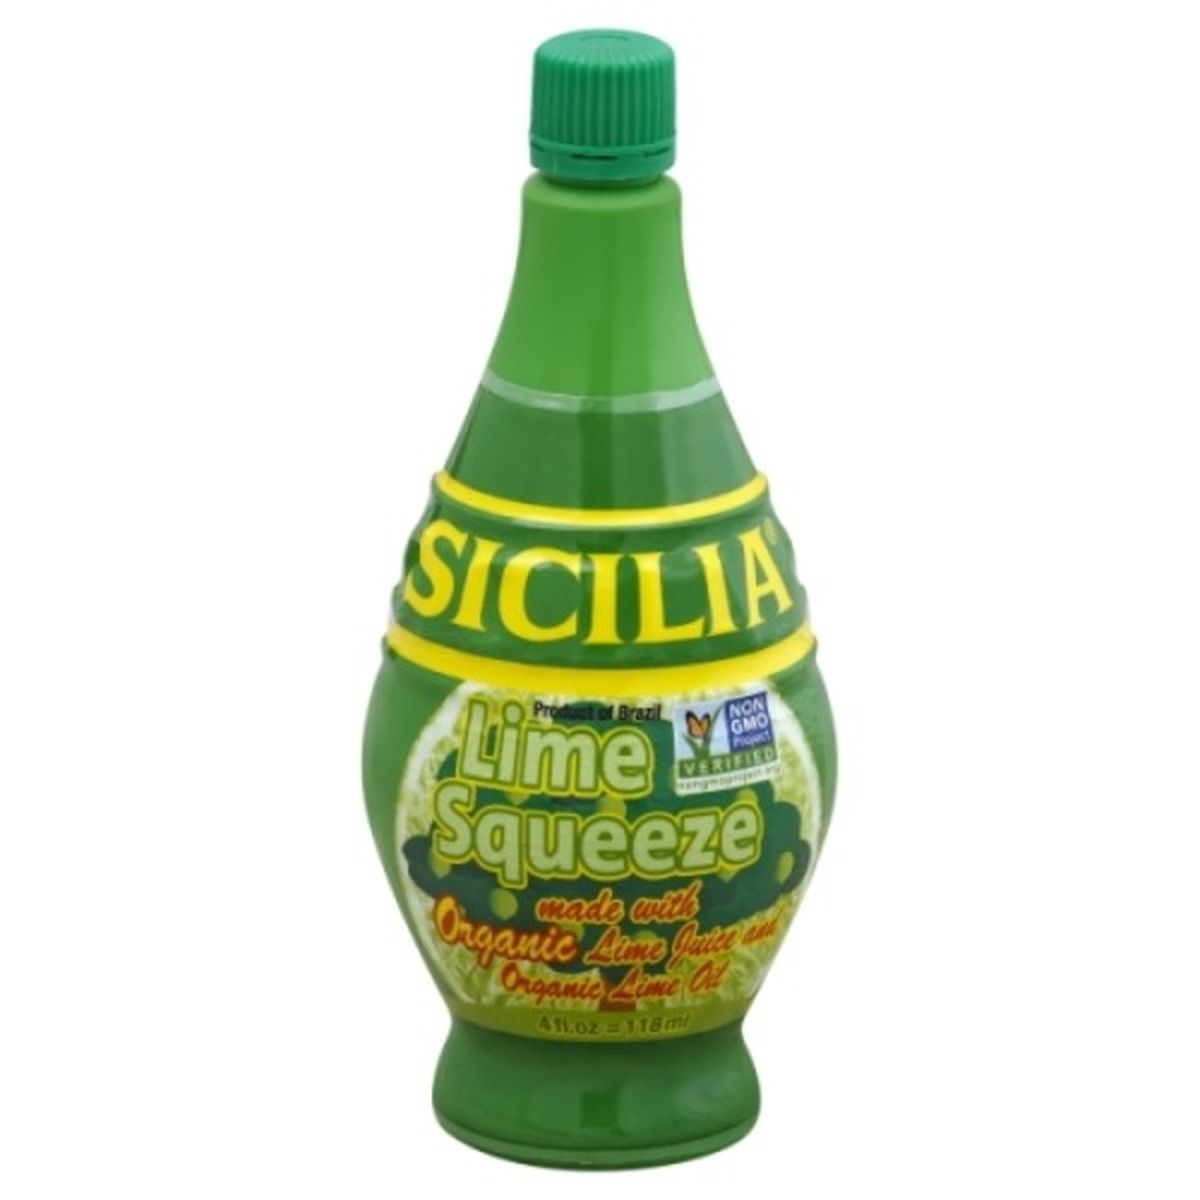 Calories in Sicilia Lime Squeeze